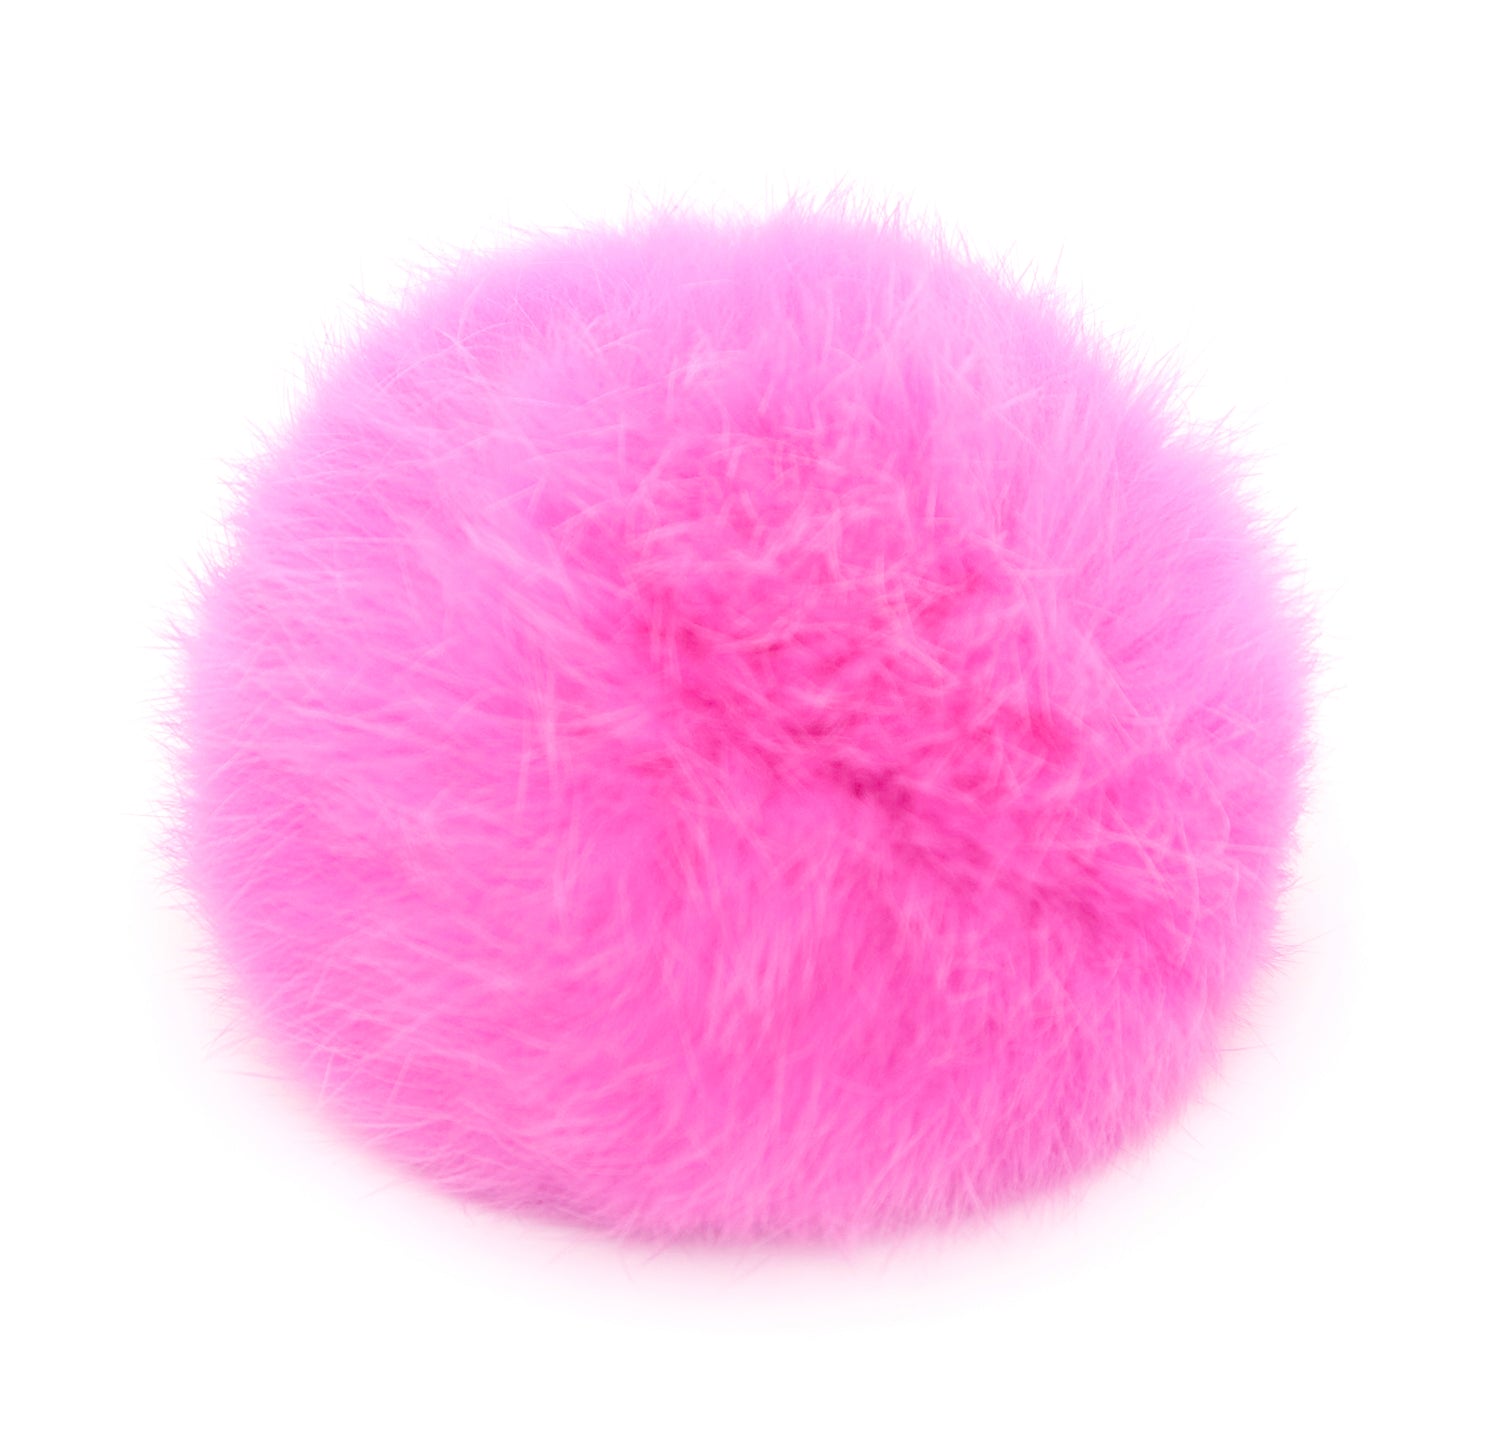 Mini bobbl - Hot Pink - Fur Pom Pom